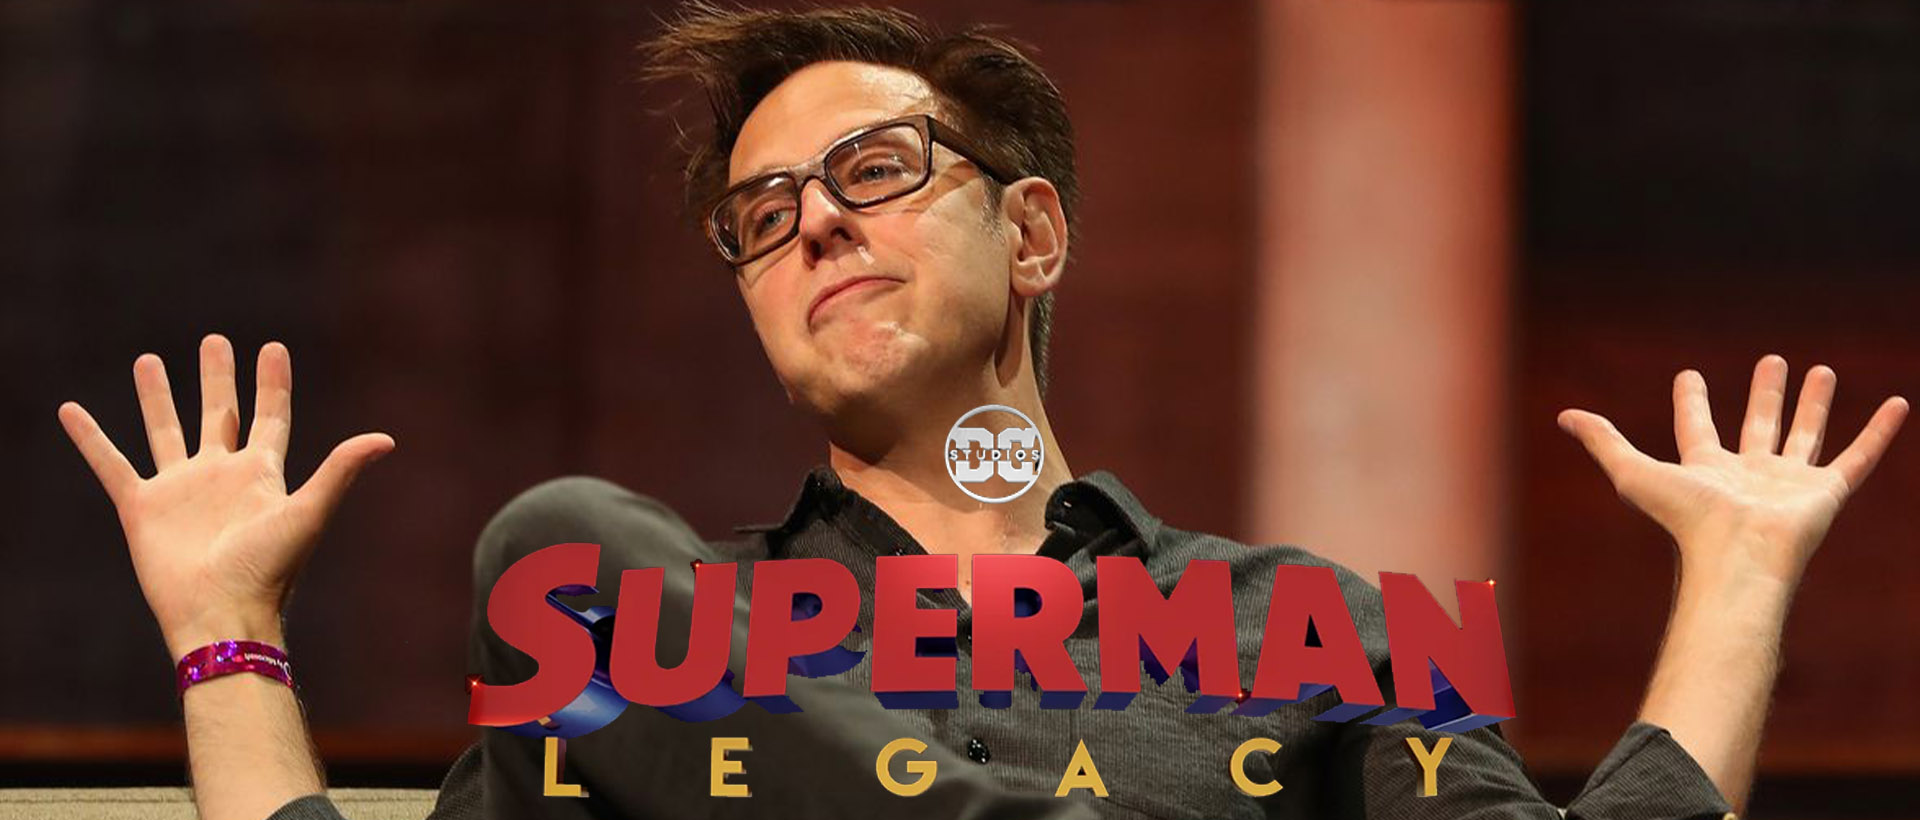 james gunn superman legacy directing banner